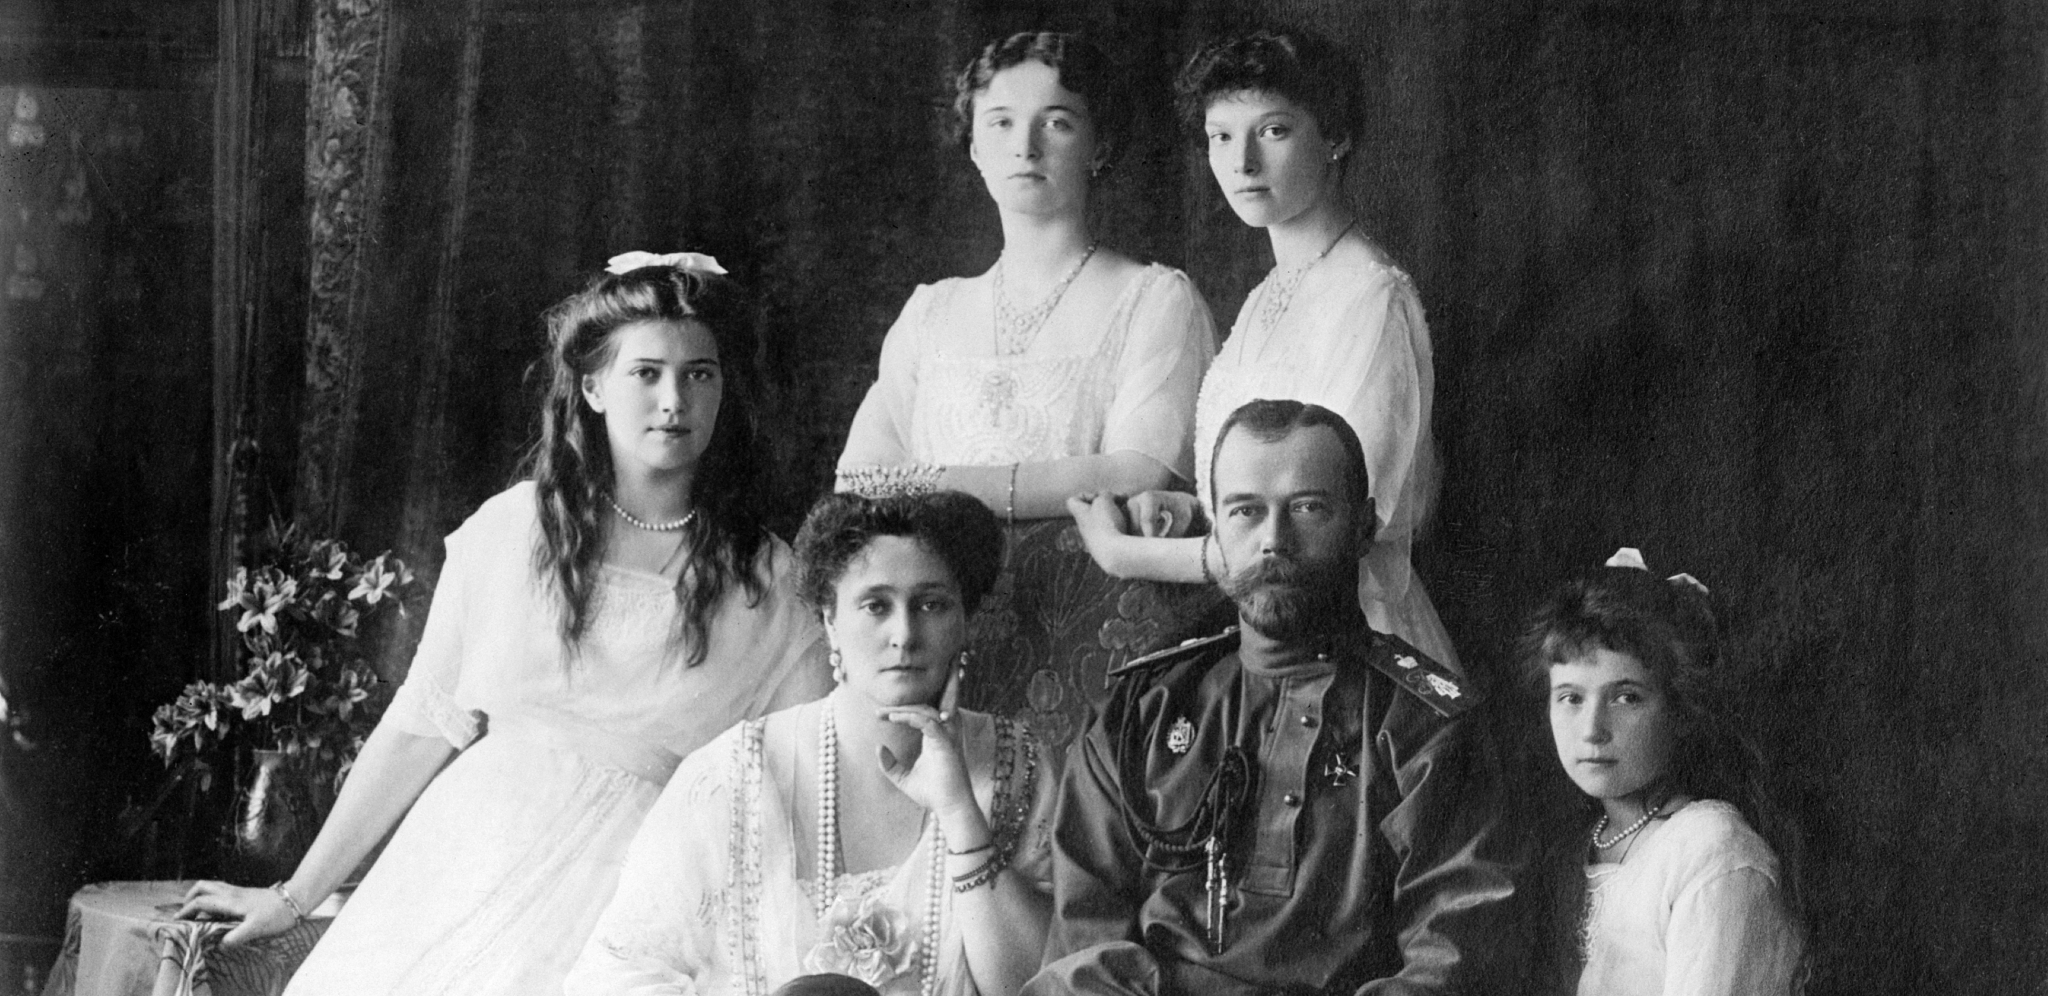 SRBIJA MU DUGUJE MNOGO Na današnji dan rođen je poslednji ruski car Nikolaj II Romanov, a njegova tragična sudbina je i dan danas tema